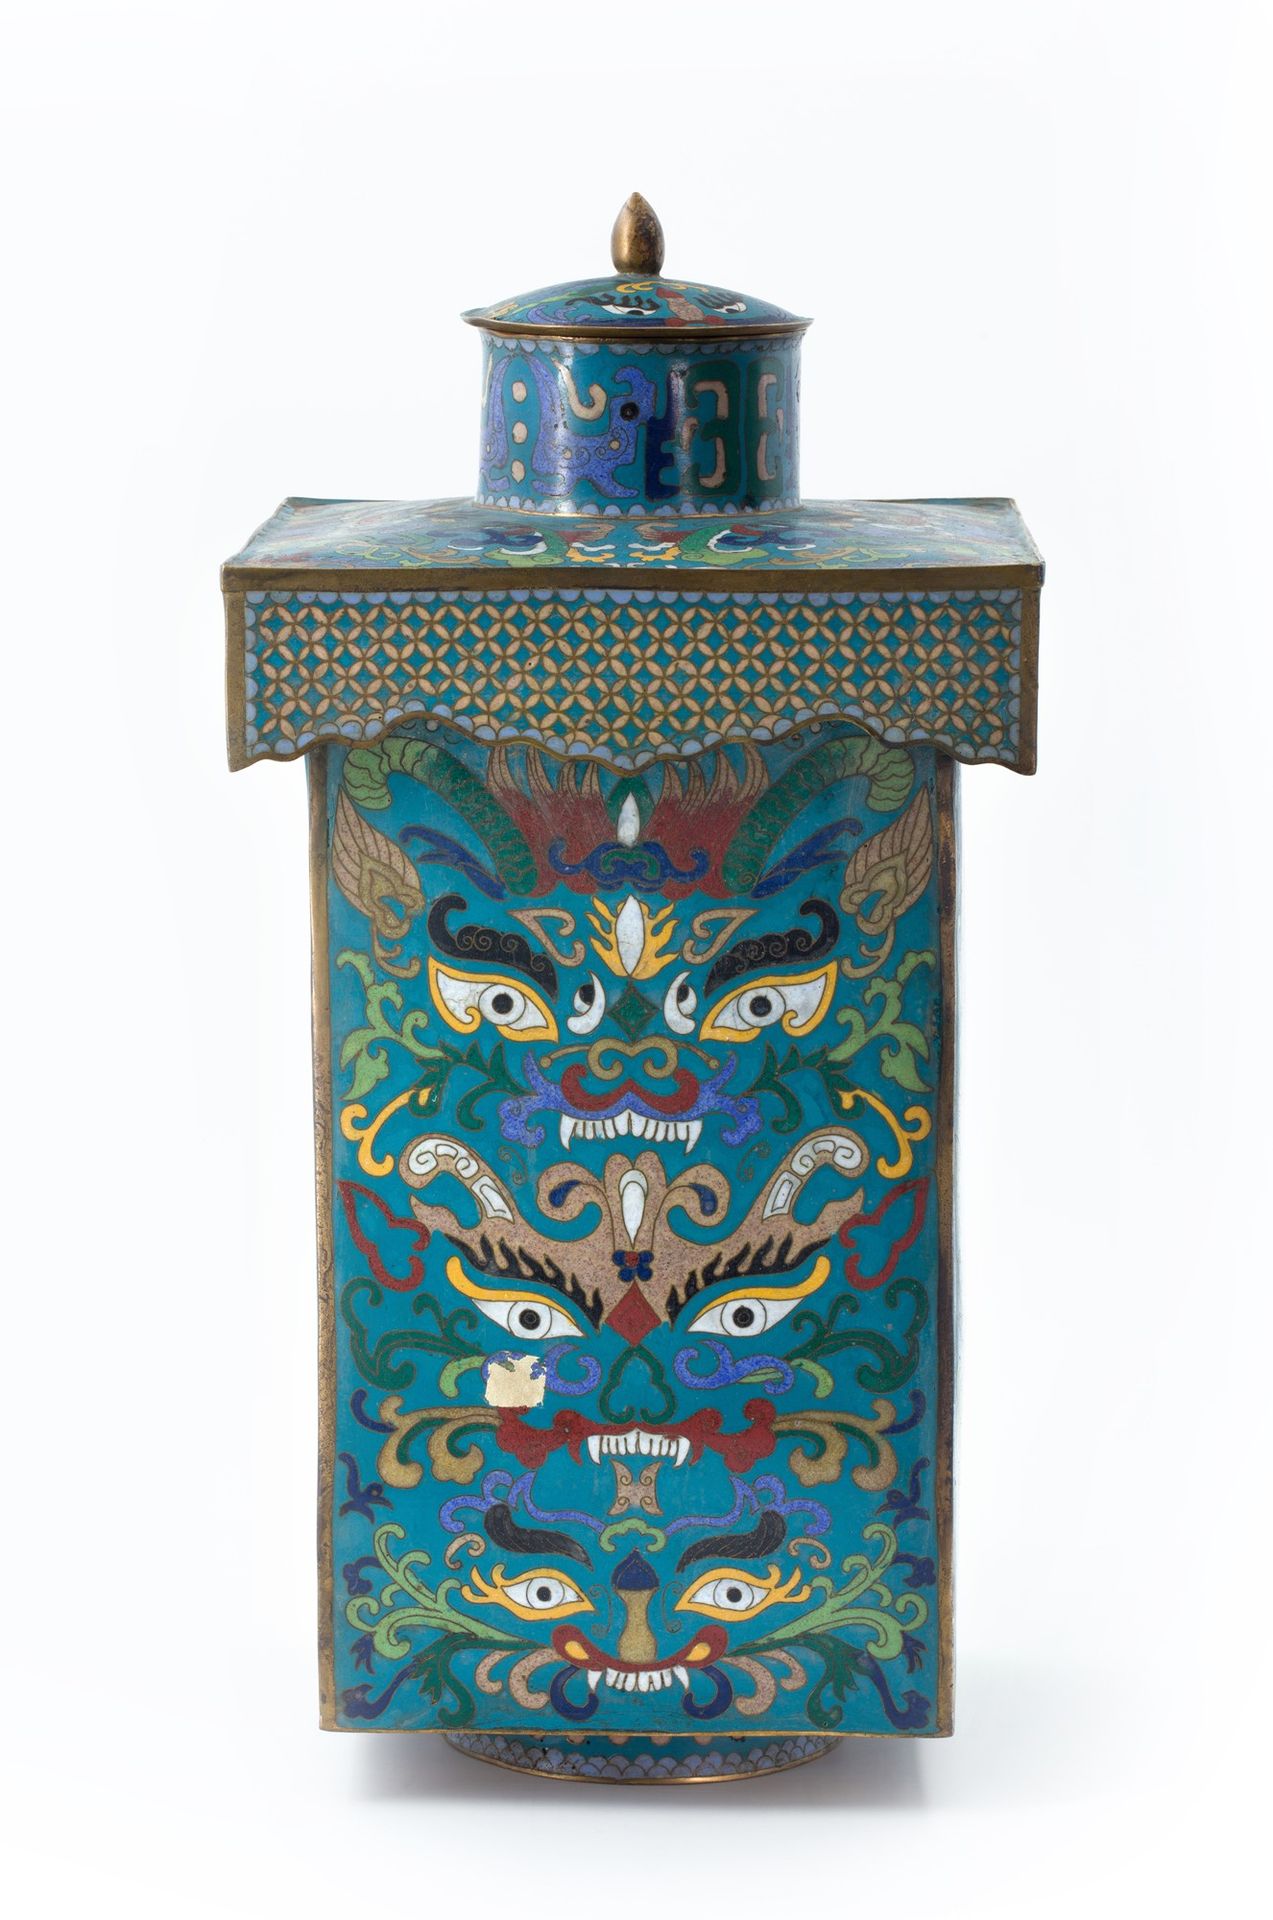 Null 正方形的CLOISONNÉ花瓶 中国，19世纪末

在绿松石地面上，它的每一面都有饕餮面具的装饰；从顶部下来的景泰蓝正面也有花瓣装饰。